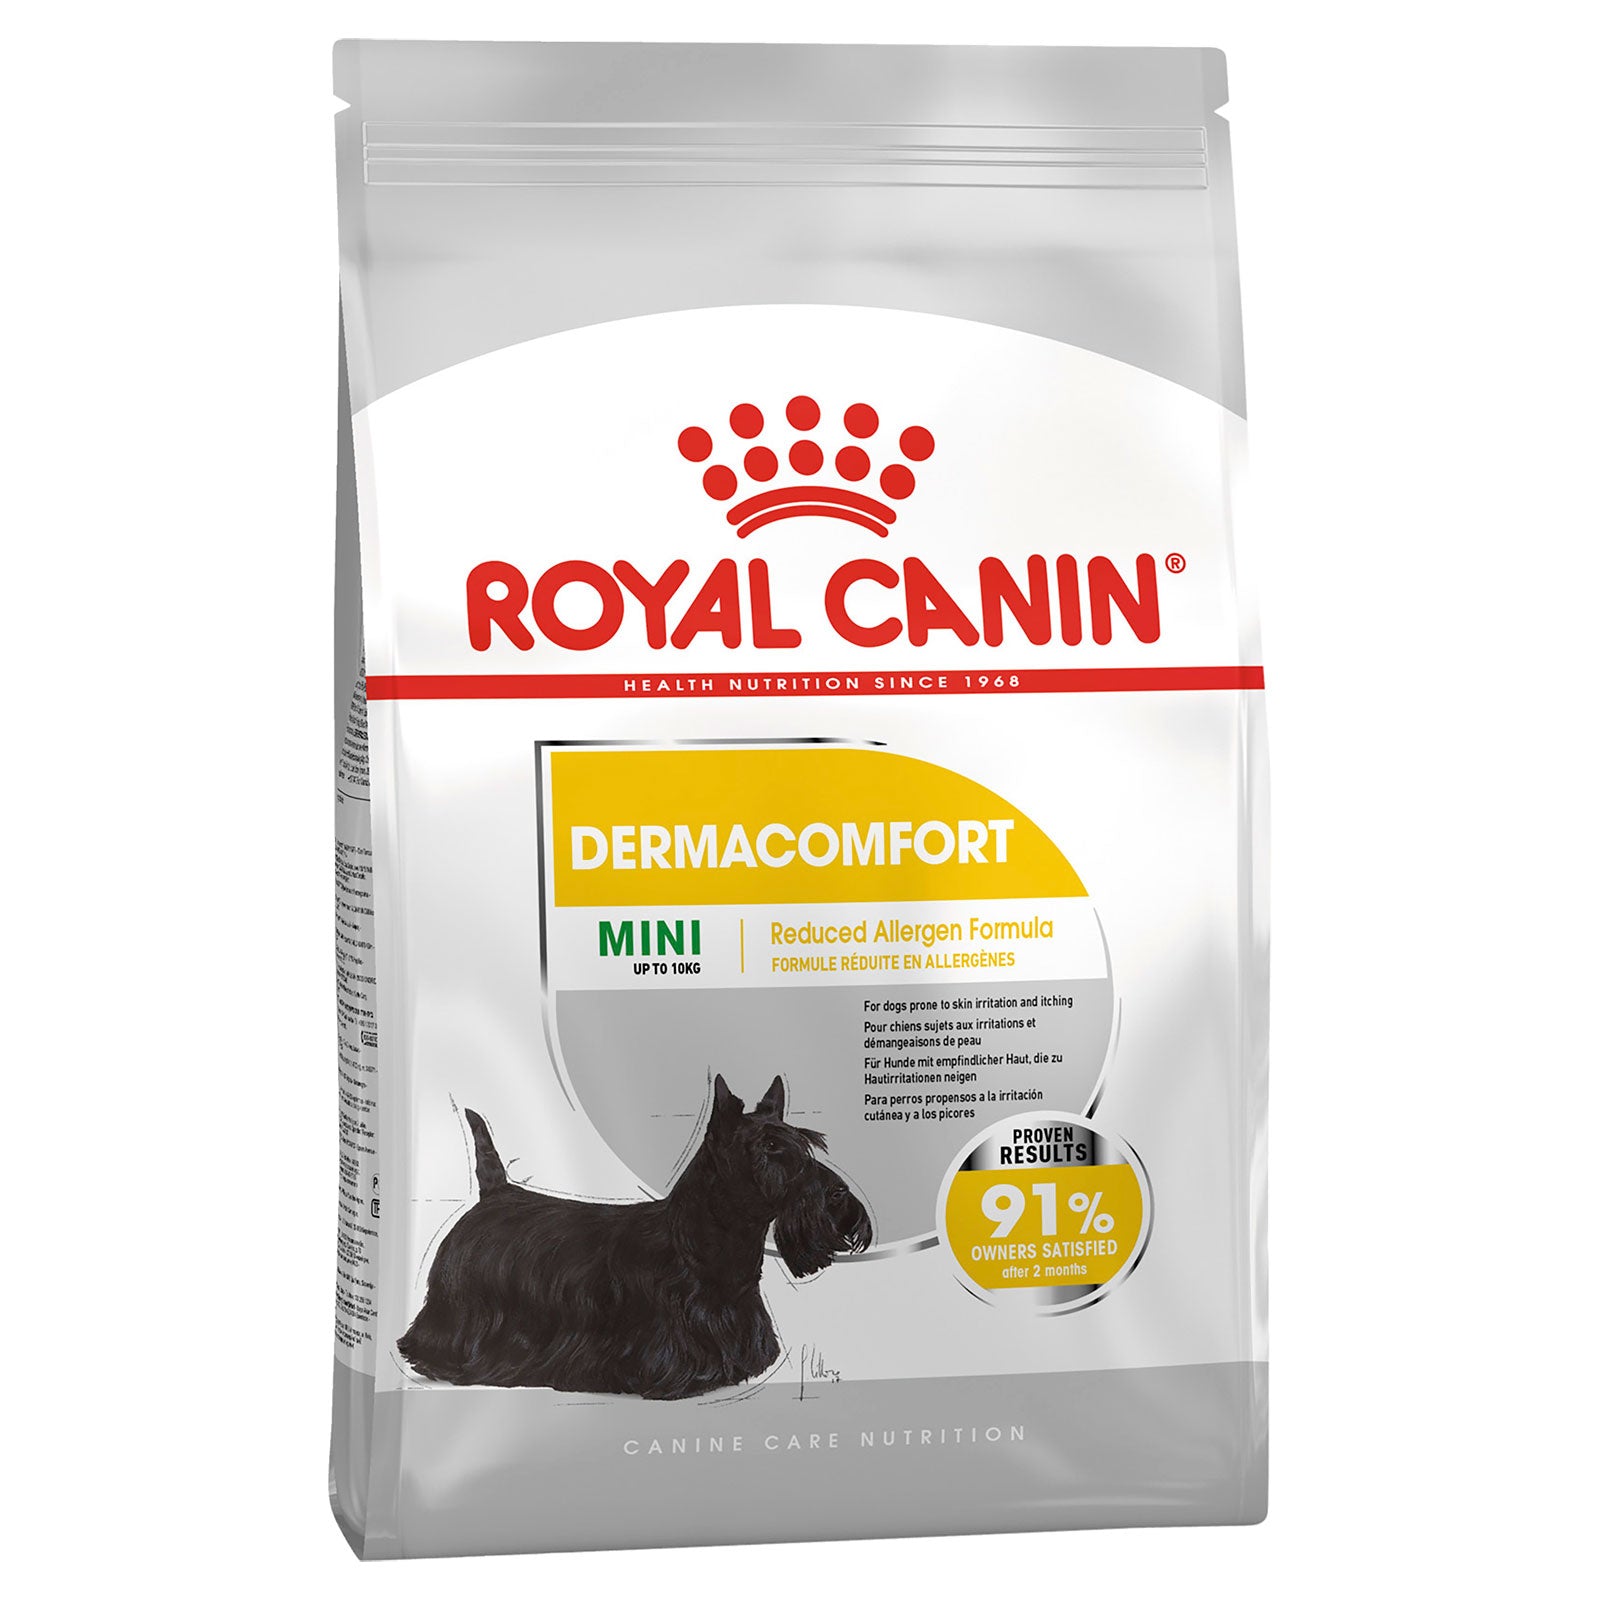 Royal Canin Dog Food Dermacomfort Mini